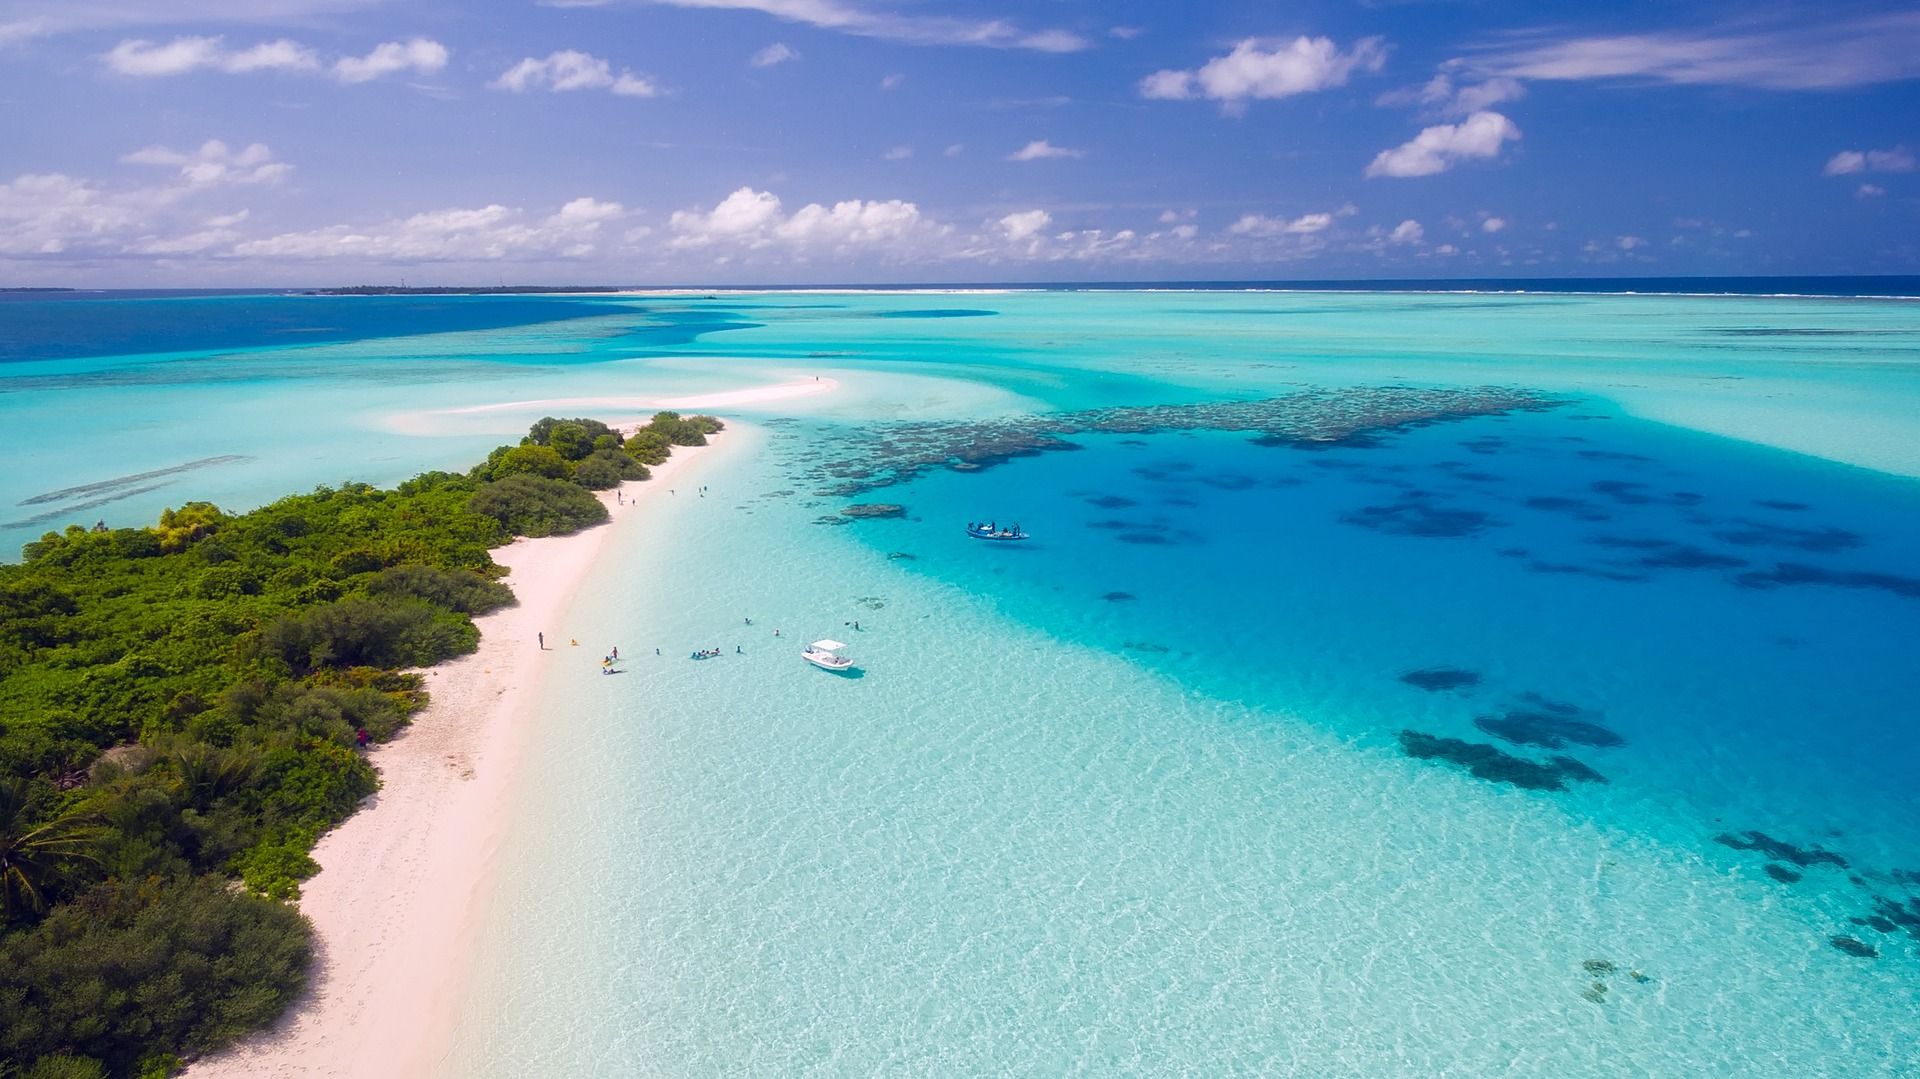 Maldive: Isola di Bathala - Simoni Viaggi